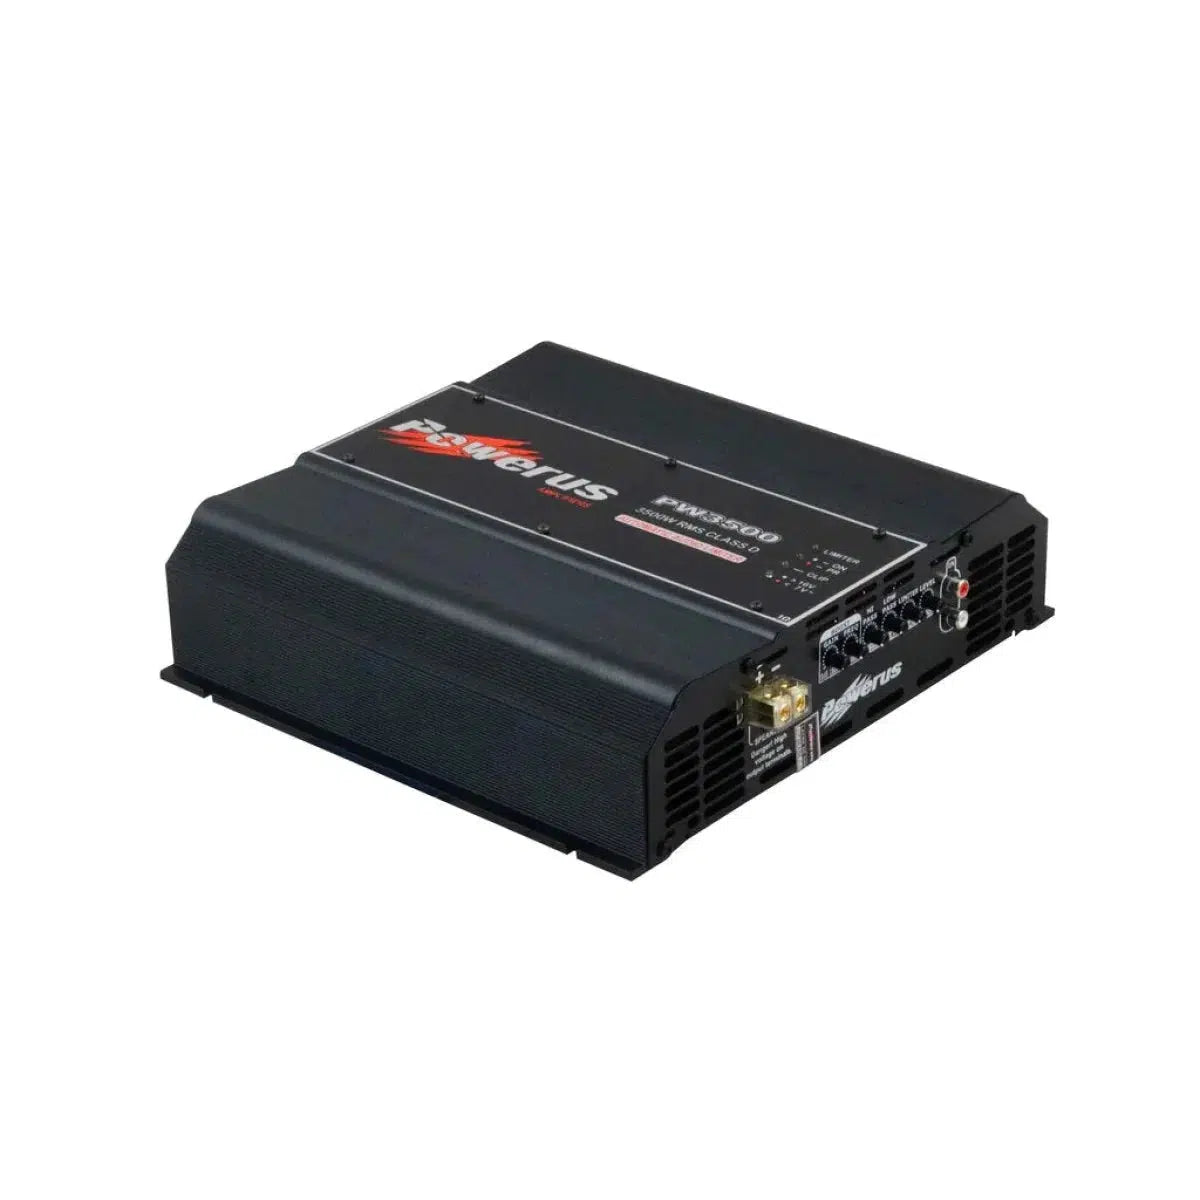 Powerus-PW3500-1-Channel Amplifier-Masori.de